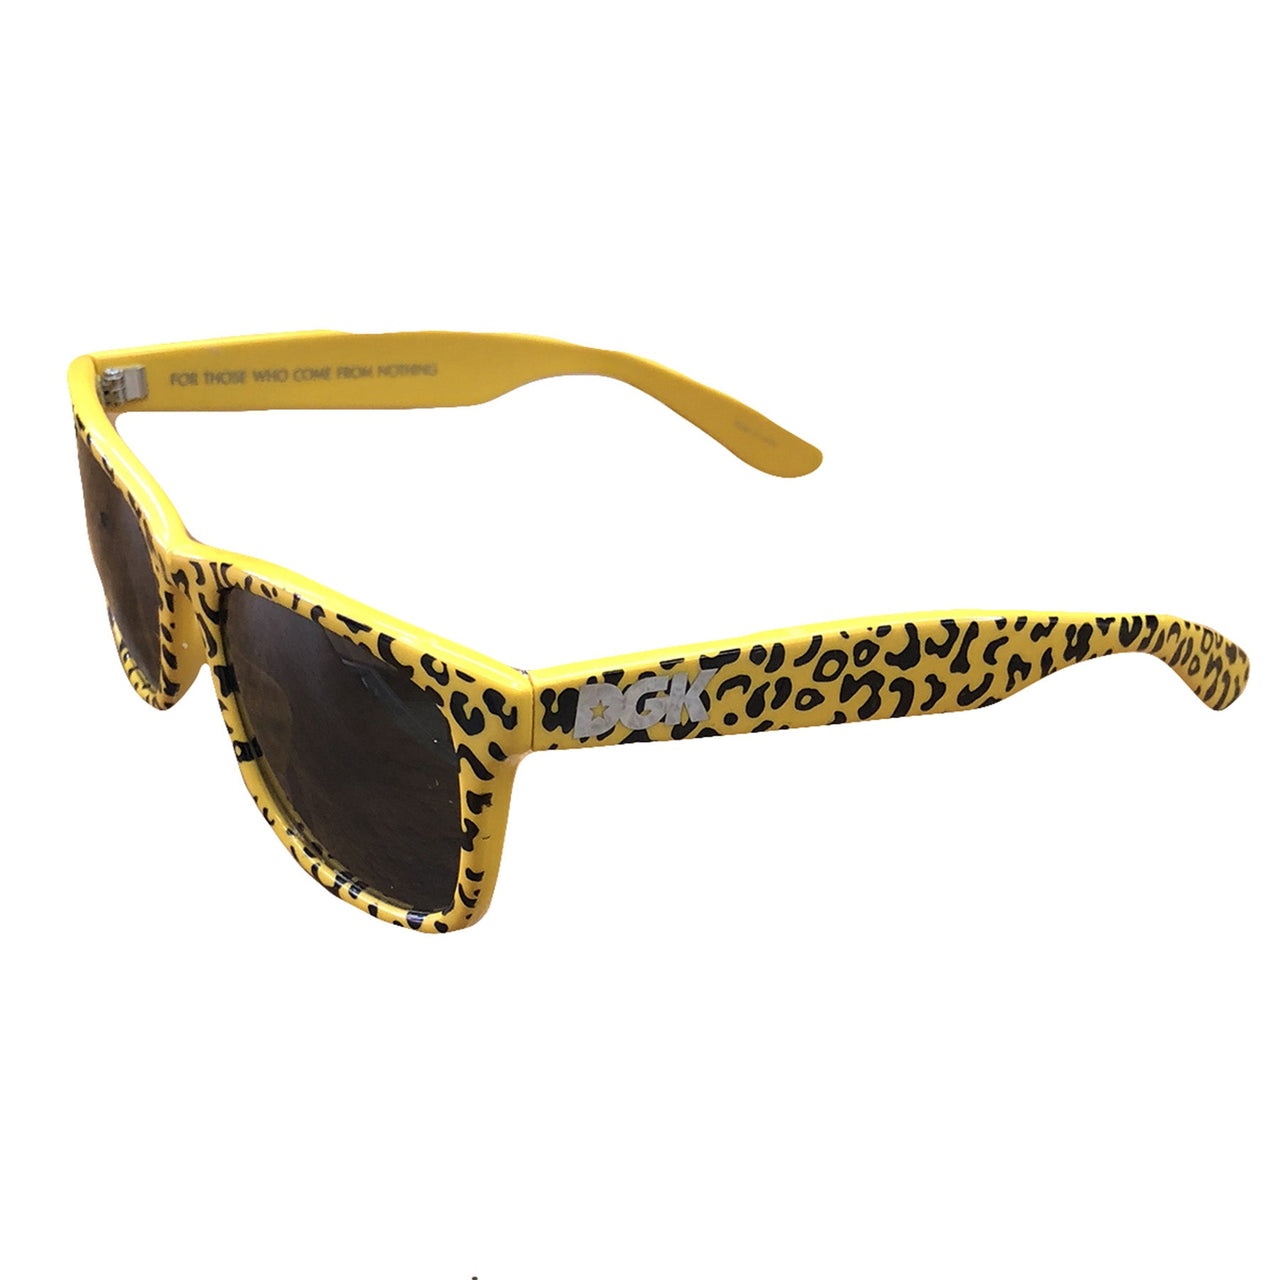 the dgk yellow cheetah print sunglasses have a yellow and black cheetah print frame